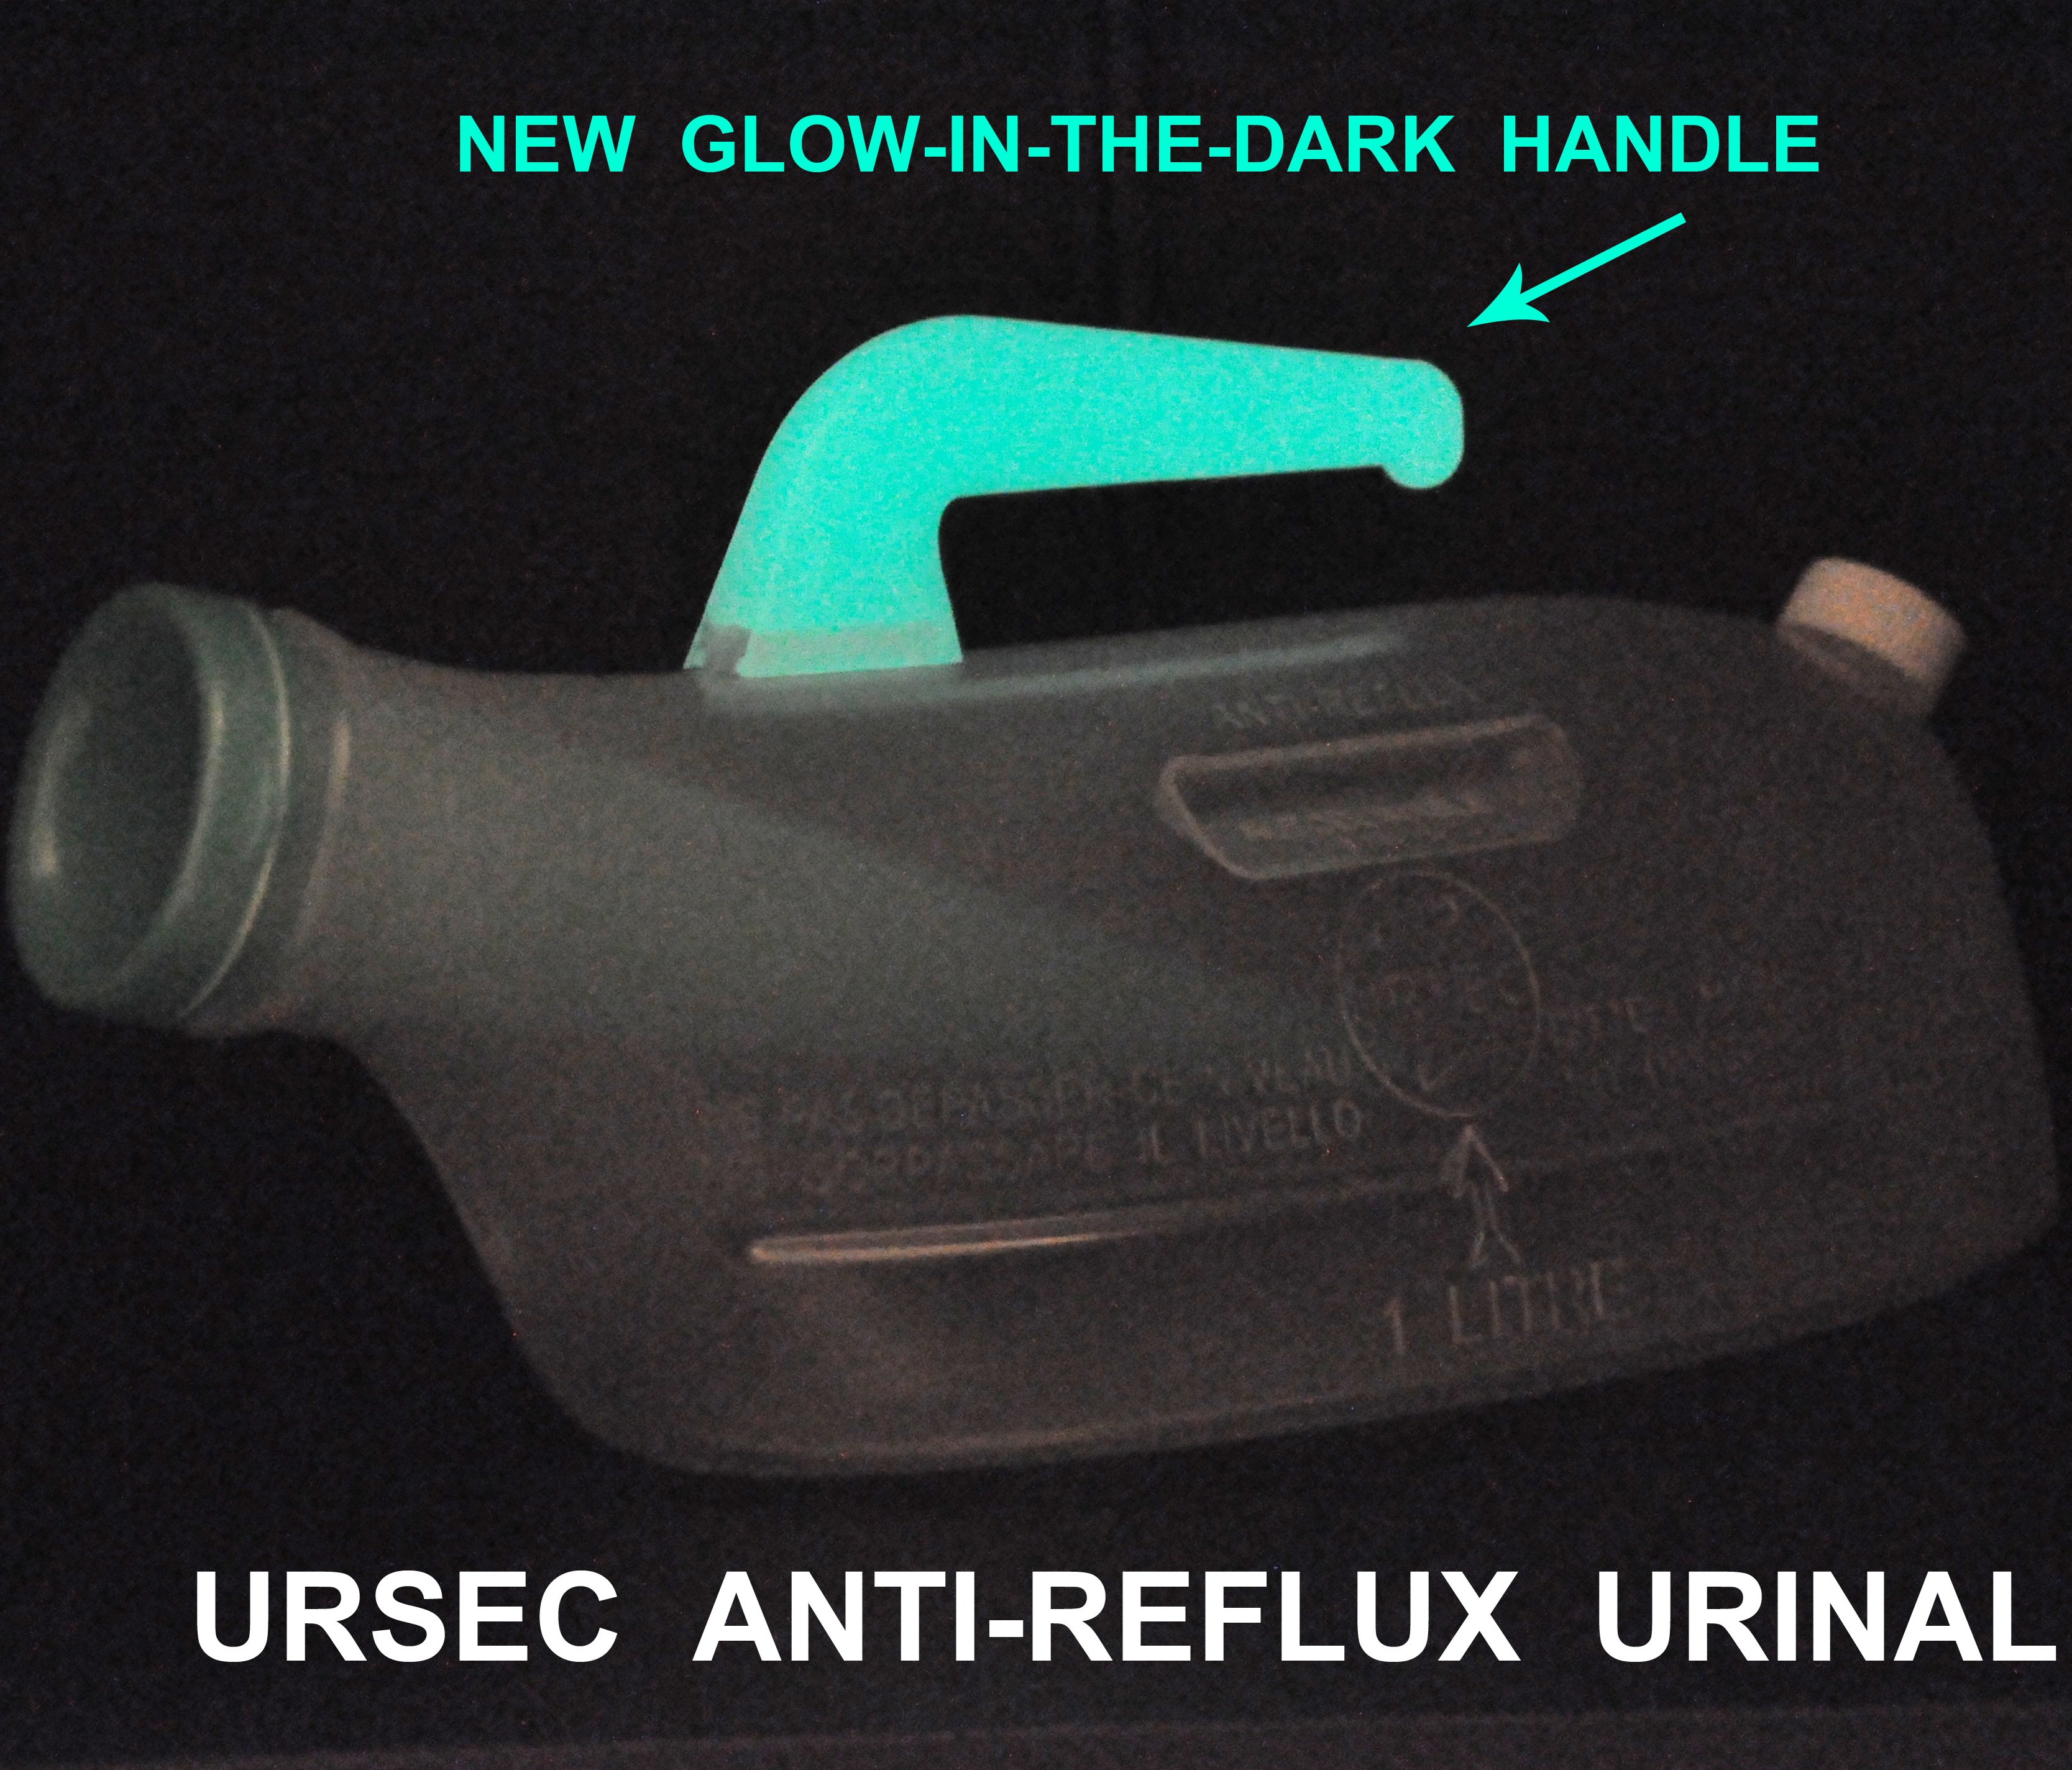 Anti-lek urinaal glow-in-the-dark